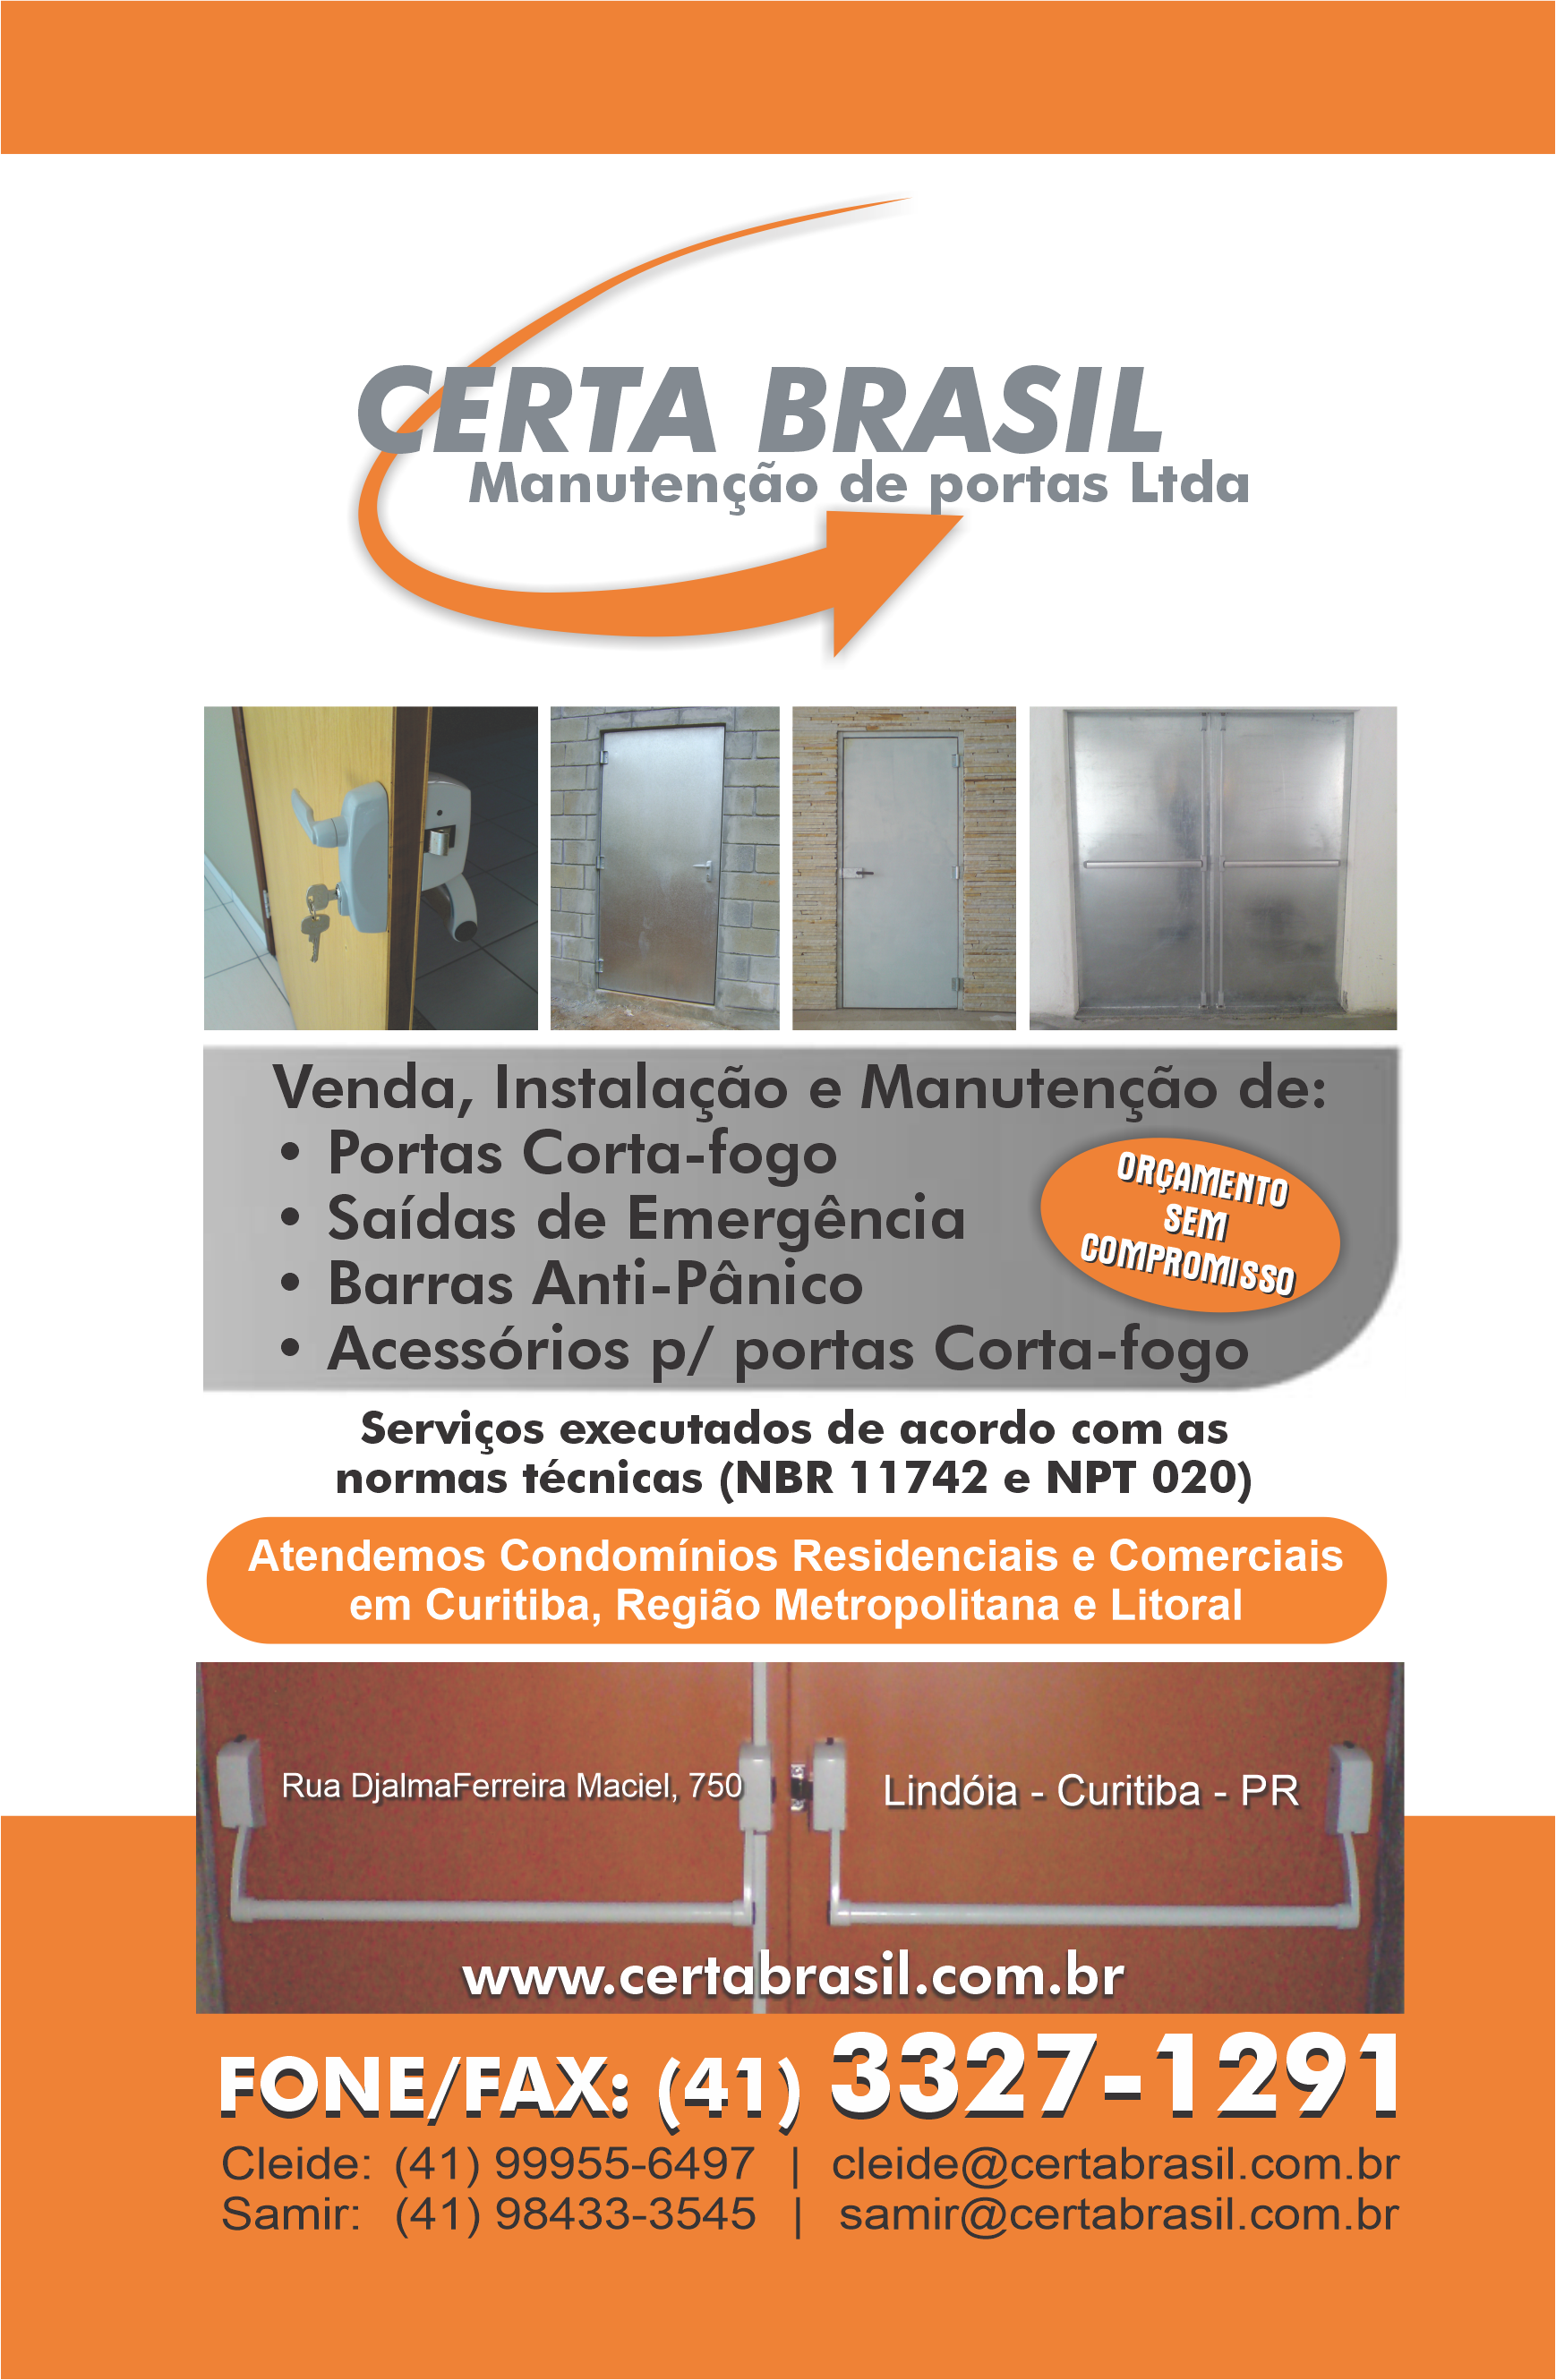 Certa Brasil Manutenção de Portas Ltda       RUA DJALMA FERREIRA MACIEL, 750, CURITIBA - PR  Fones: (41)3327-1291 /